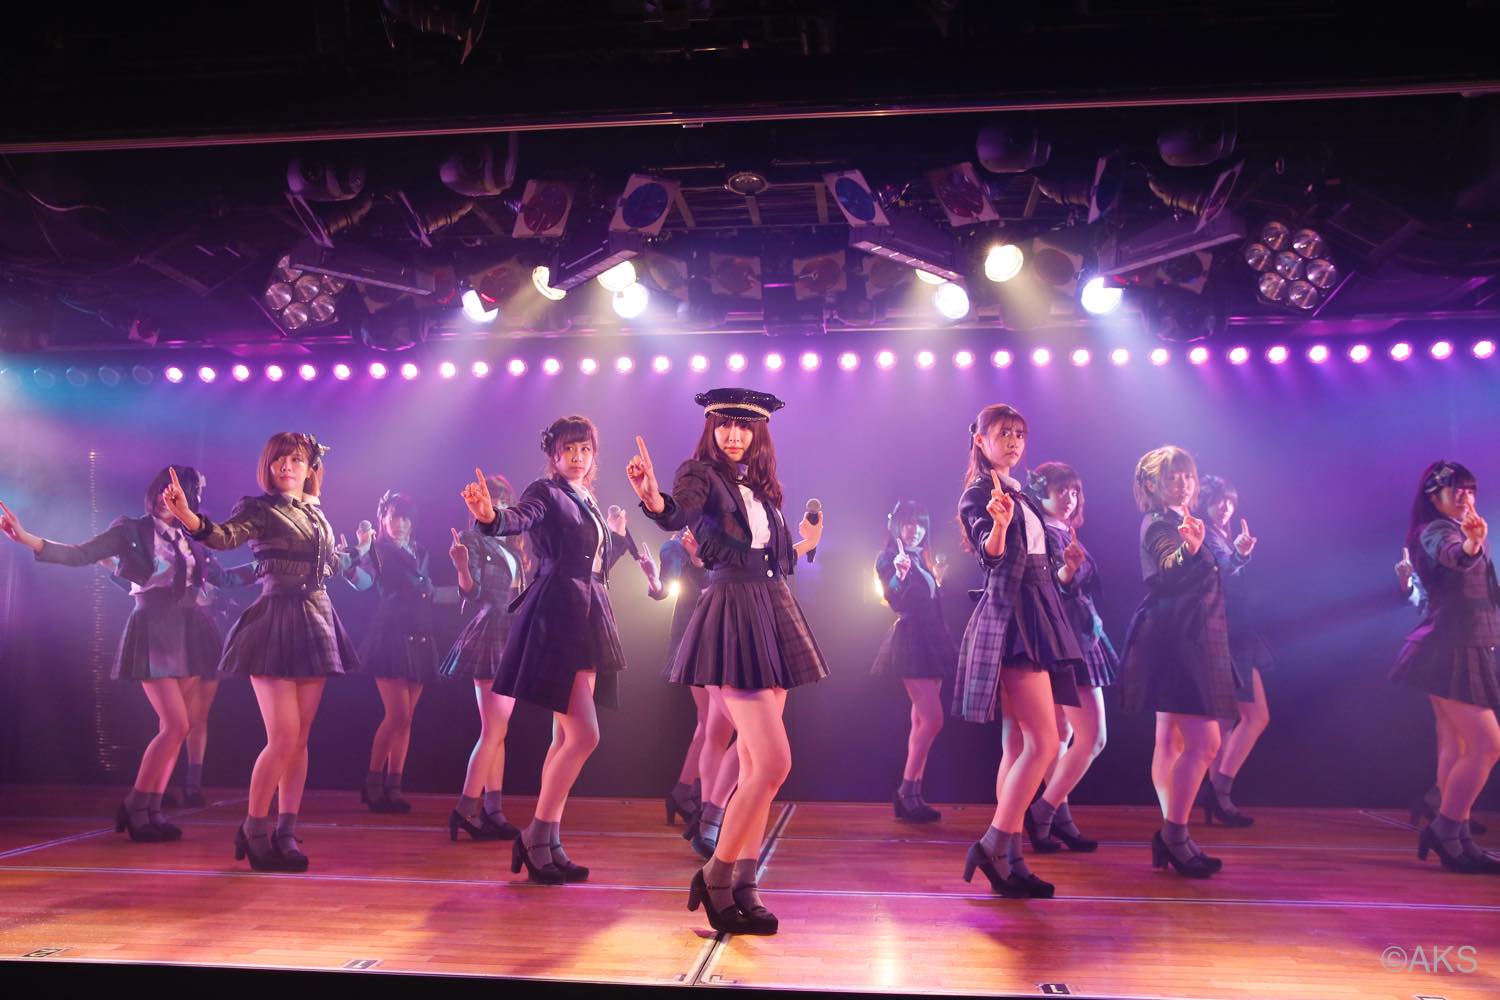 AKB48 Debut Haruna Kojima-Produced Special Stage “Koukando Bakuage” at AKB48 Theater!